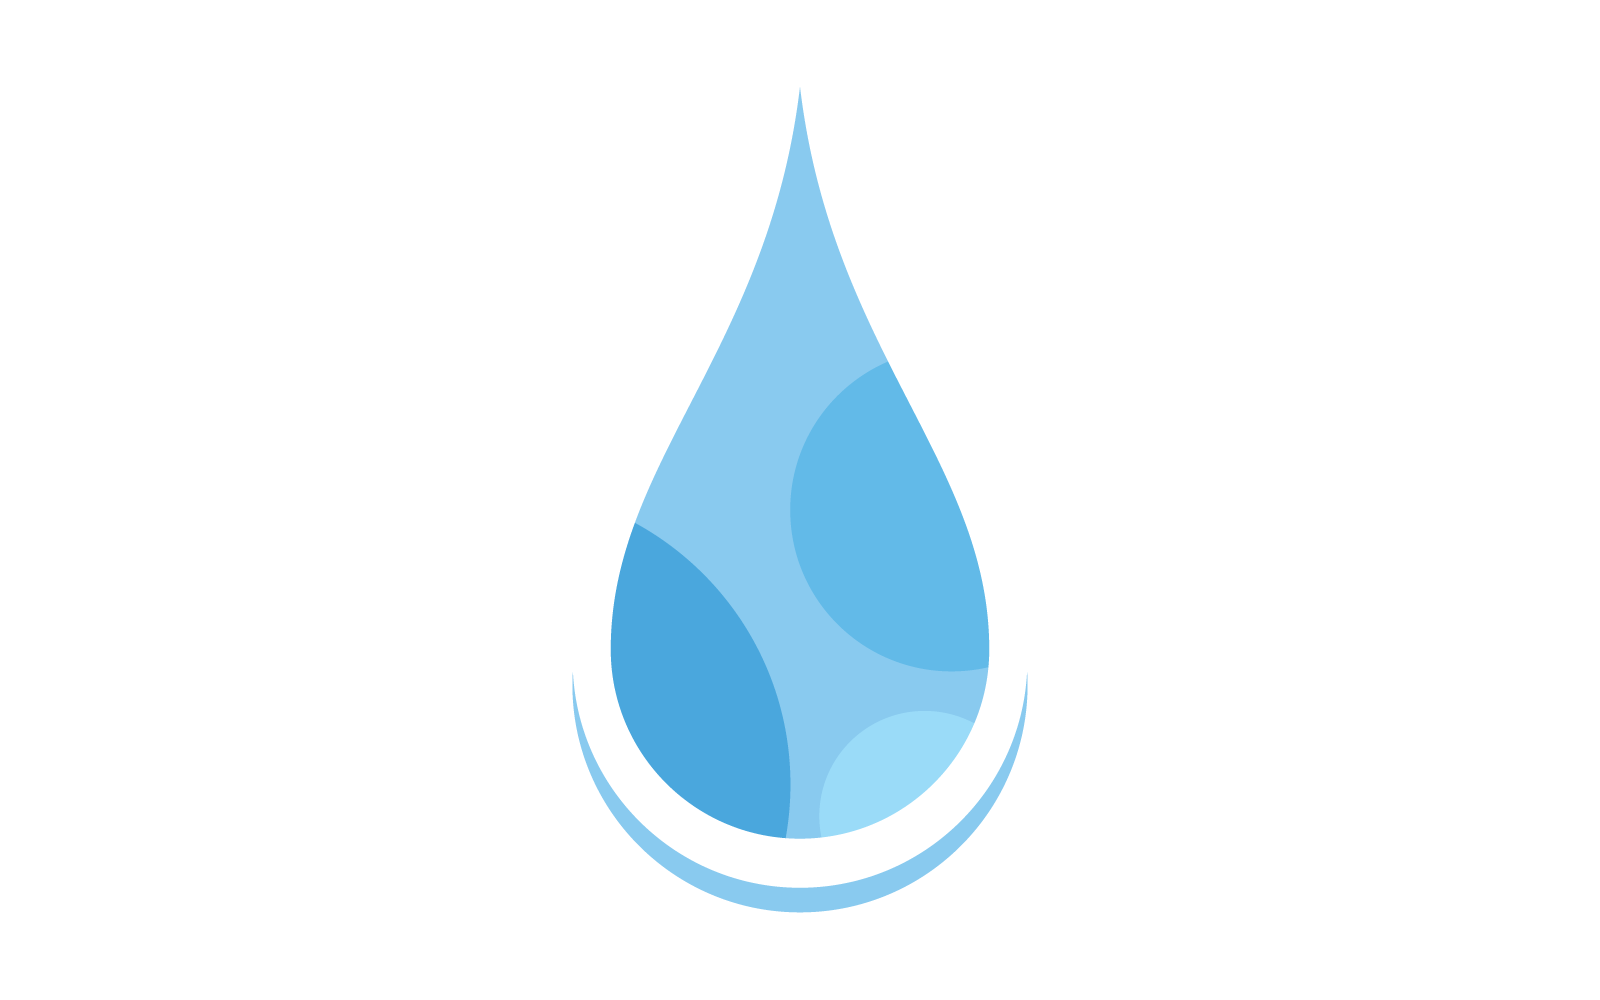 Water drop logo illustration icon vector design